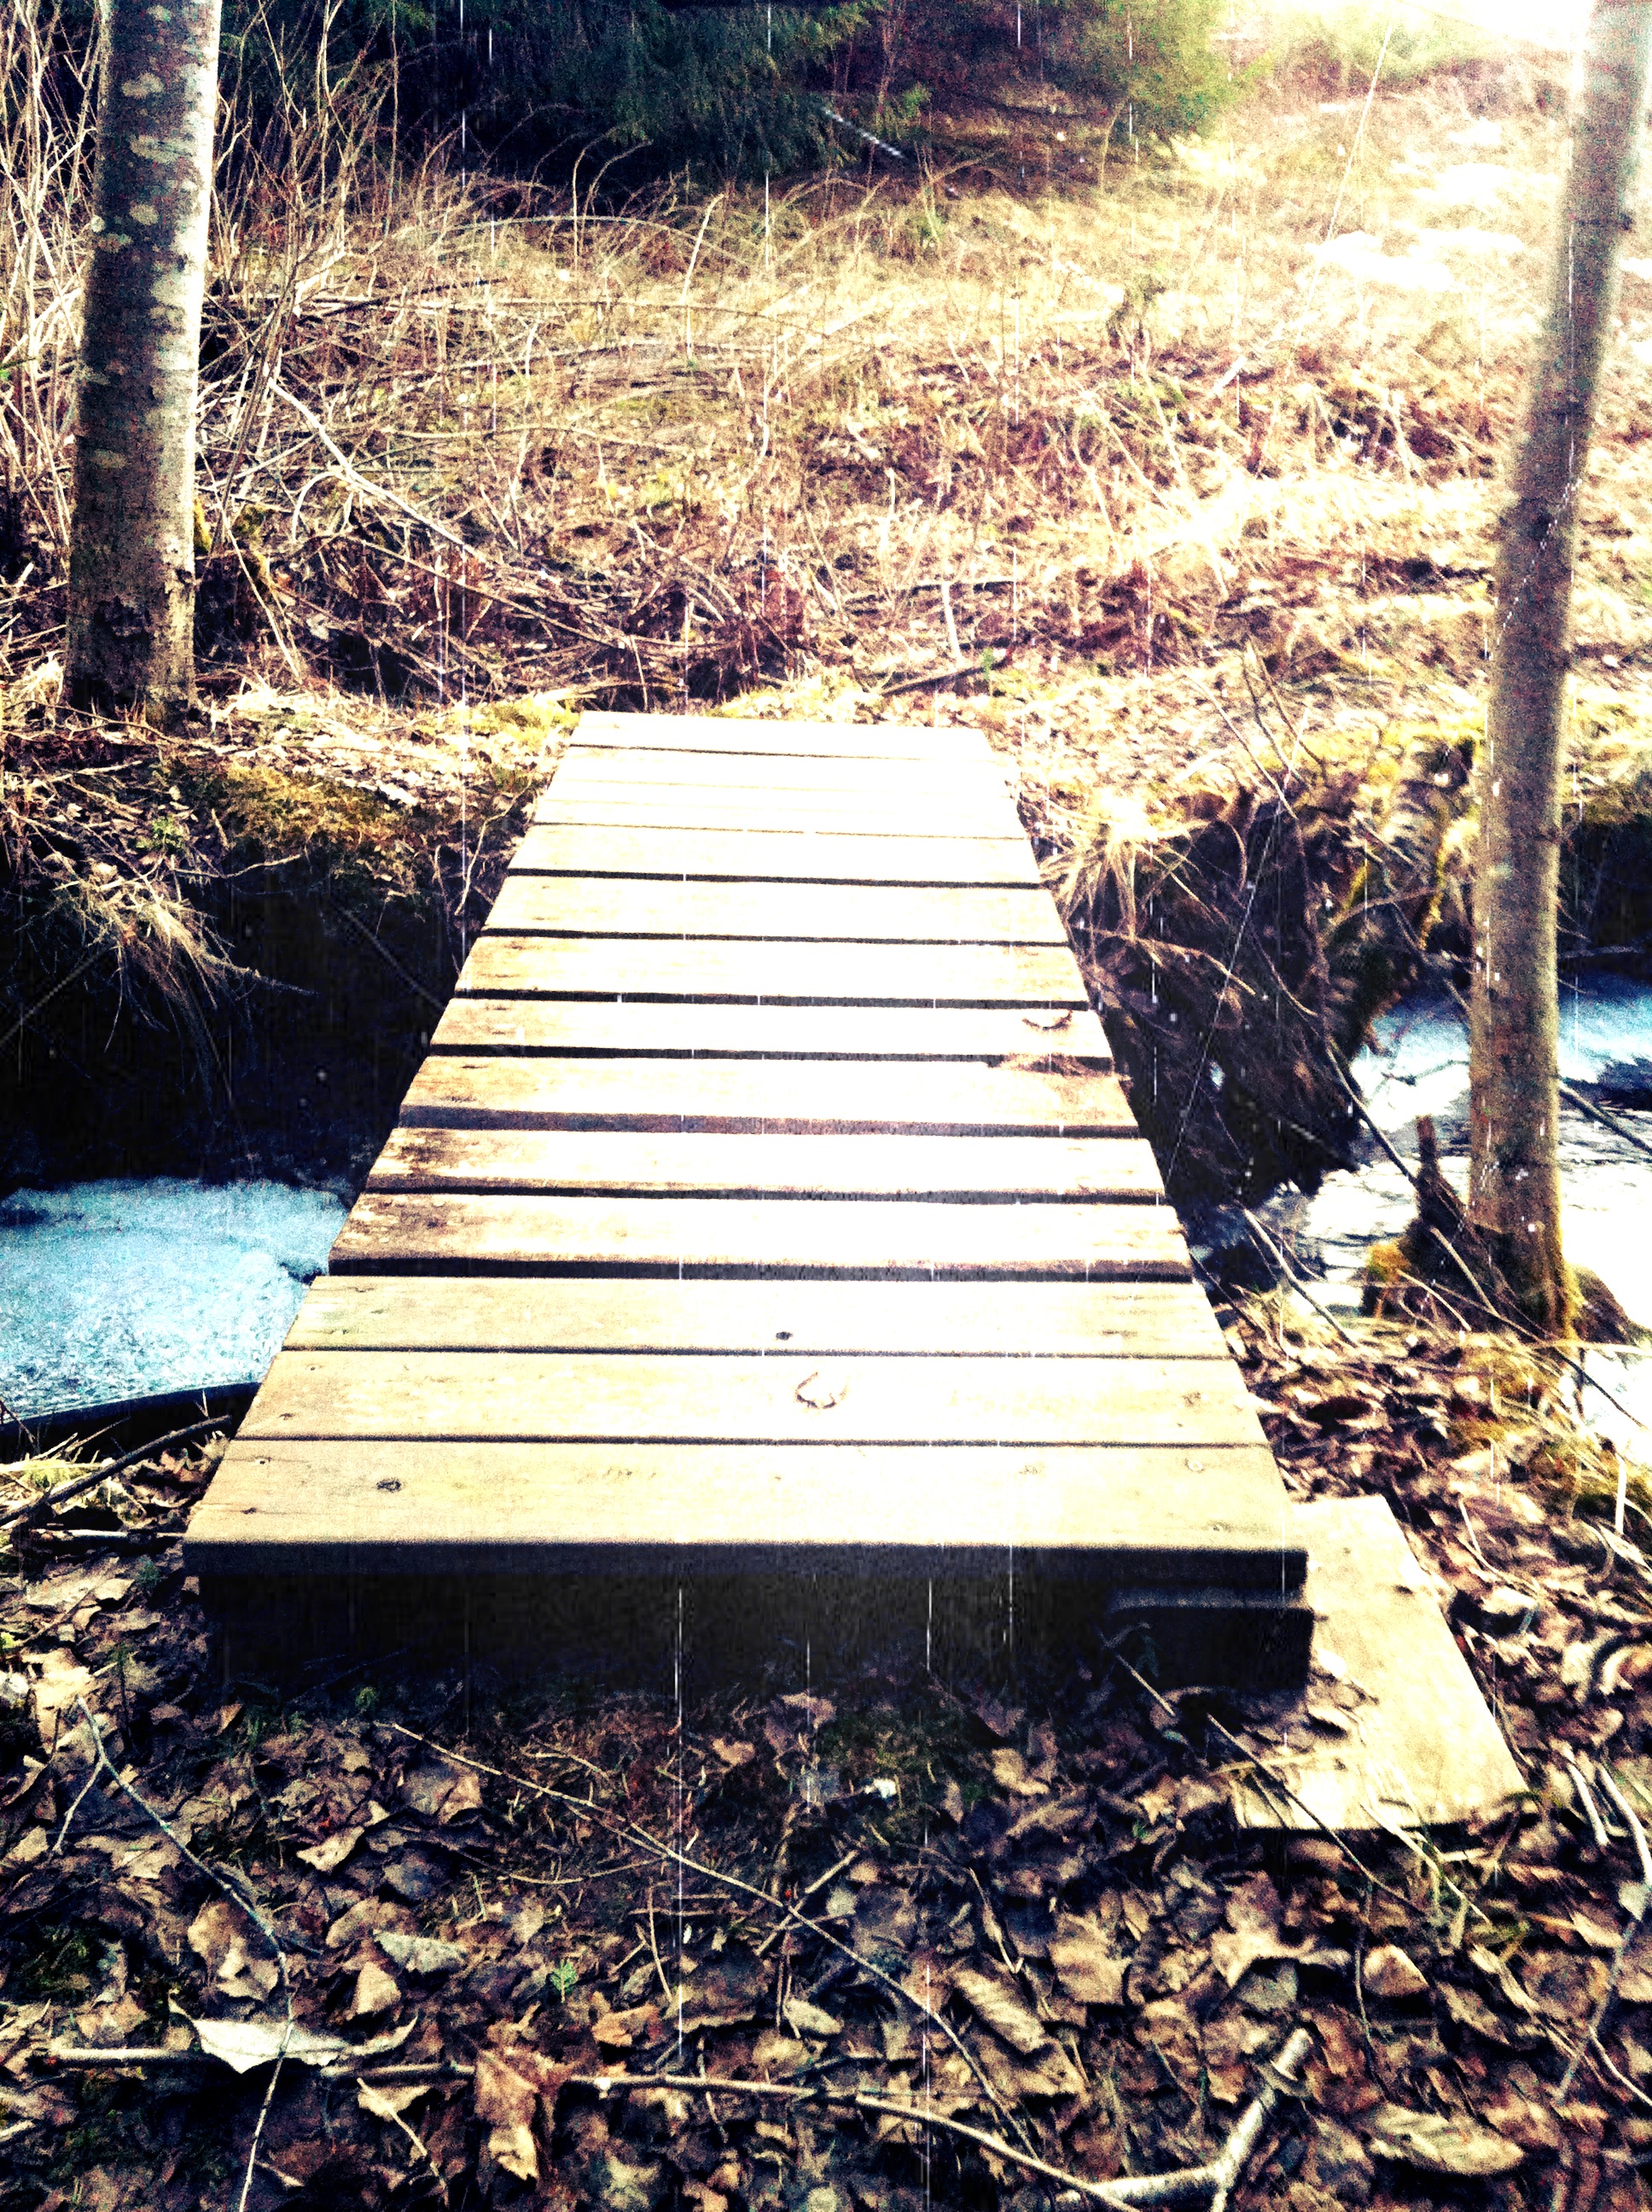 Download How To Build Wood Bridge Plans DIY one way wood ...